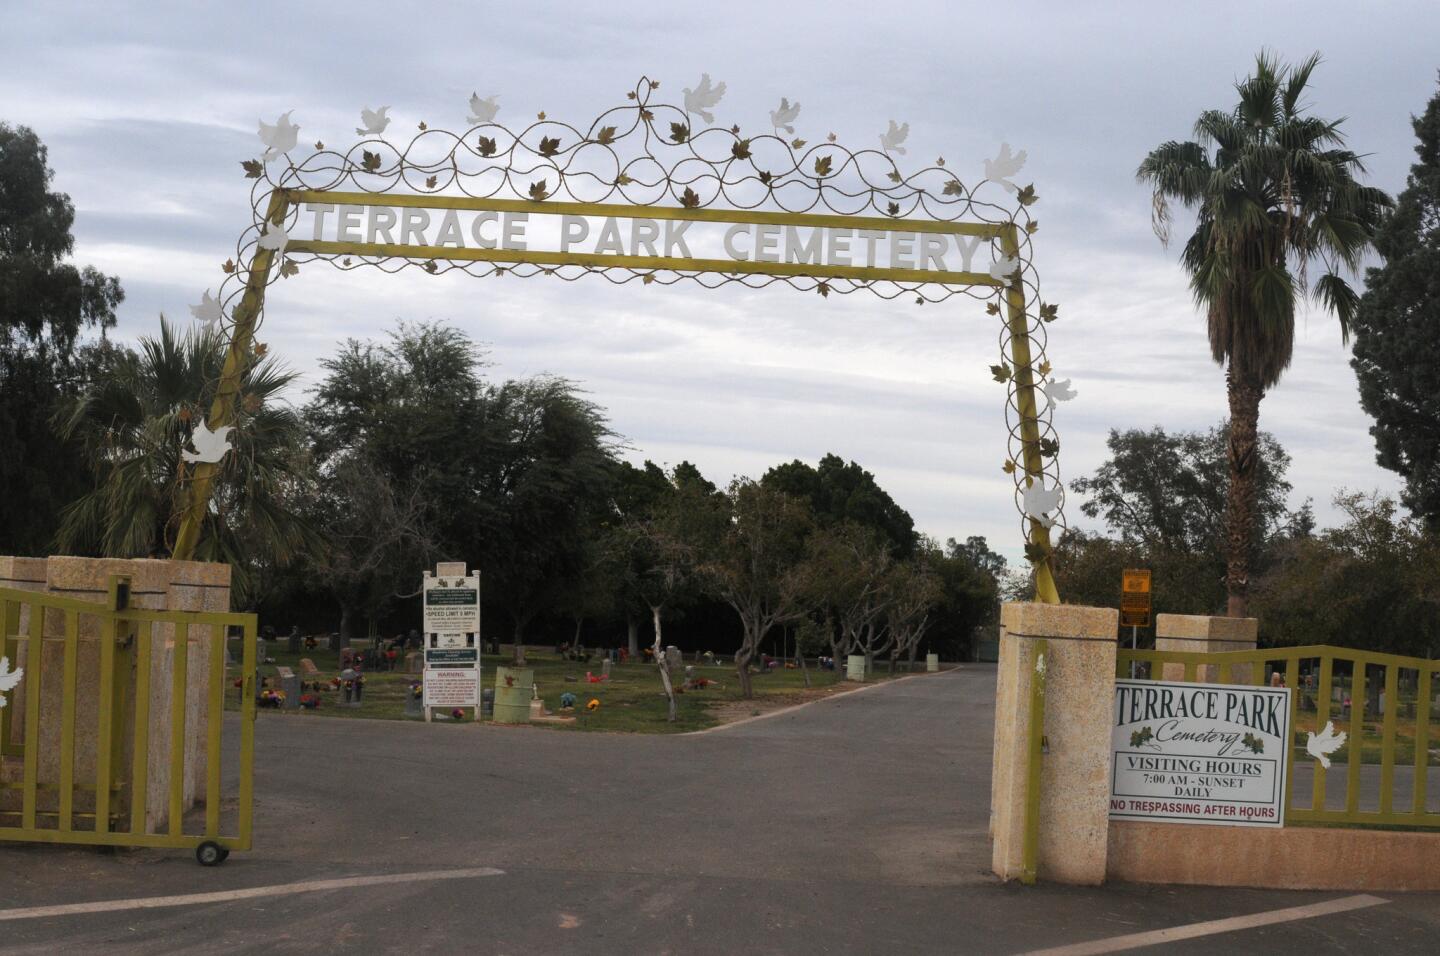 La entrada al cementerio Terrace Park en Holtville, California, a 30 kilómetros (18,6 millas) de México...